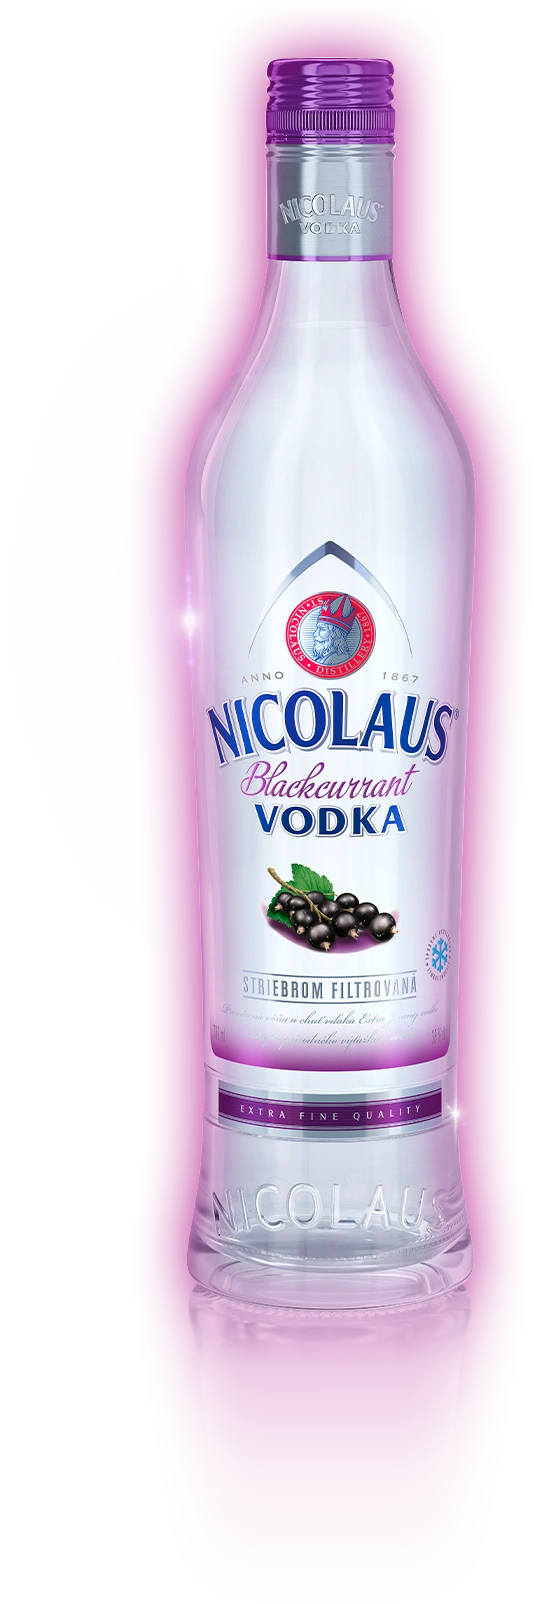 Nicolaus Blackcurrant vodka